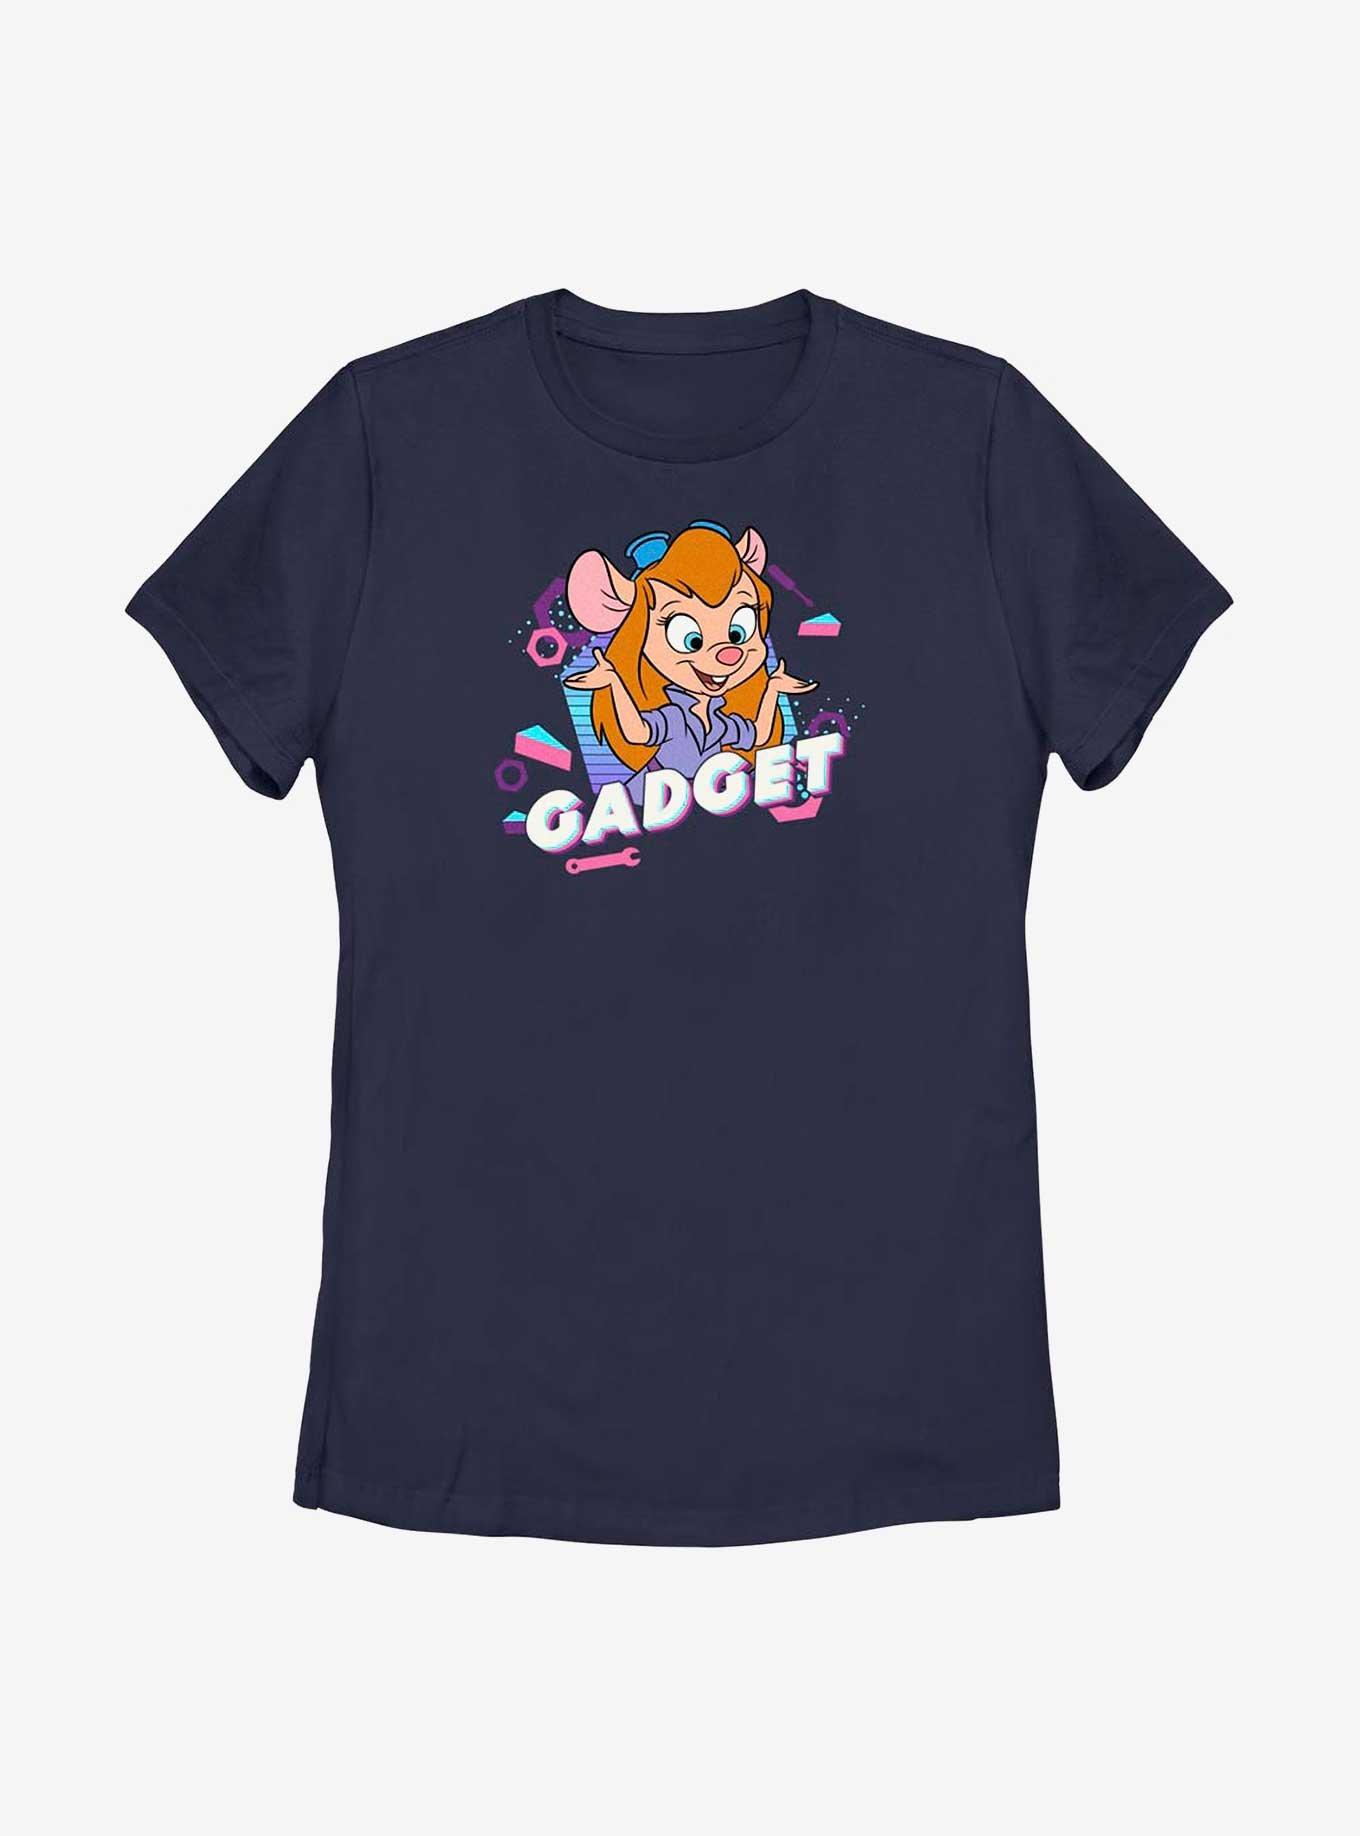 Disney Chip 'n Dale Gadget Womens T-Shirt, NAVY, hi-res